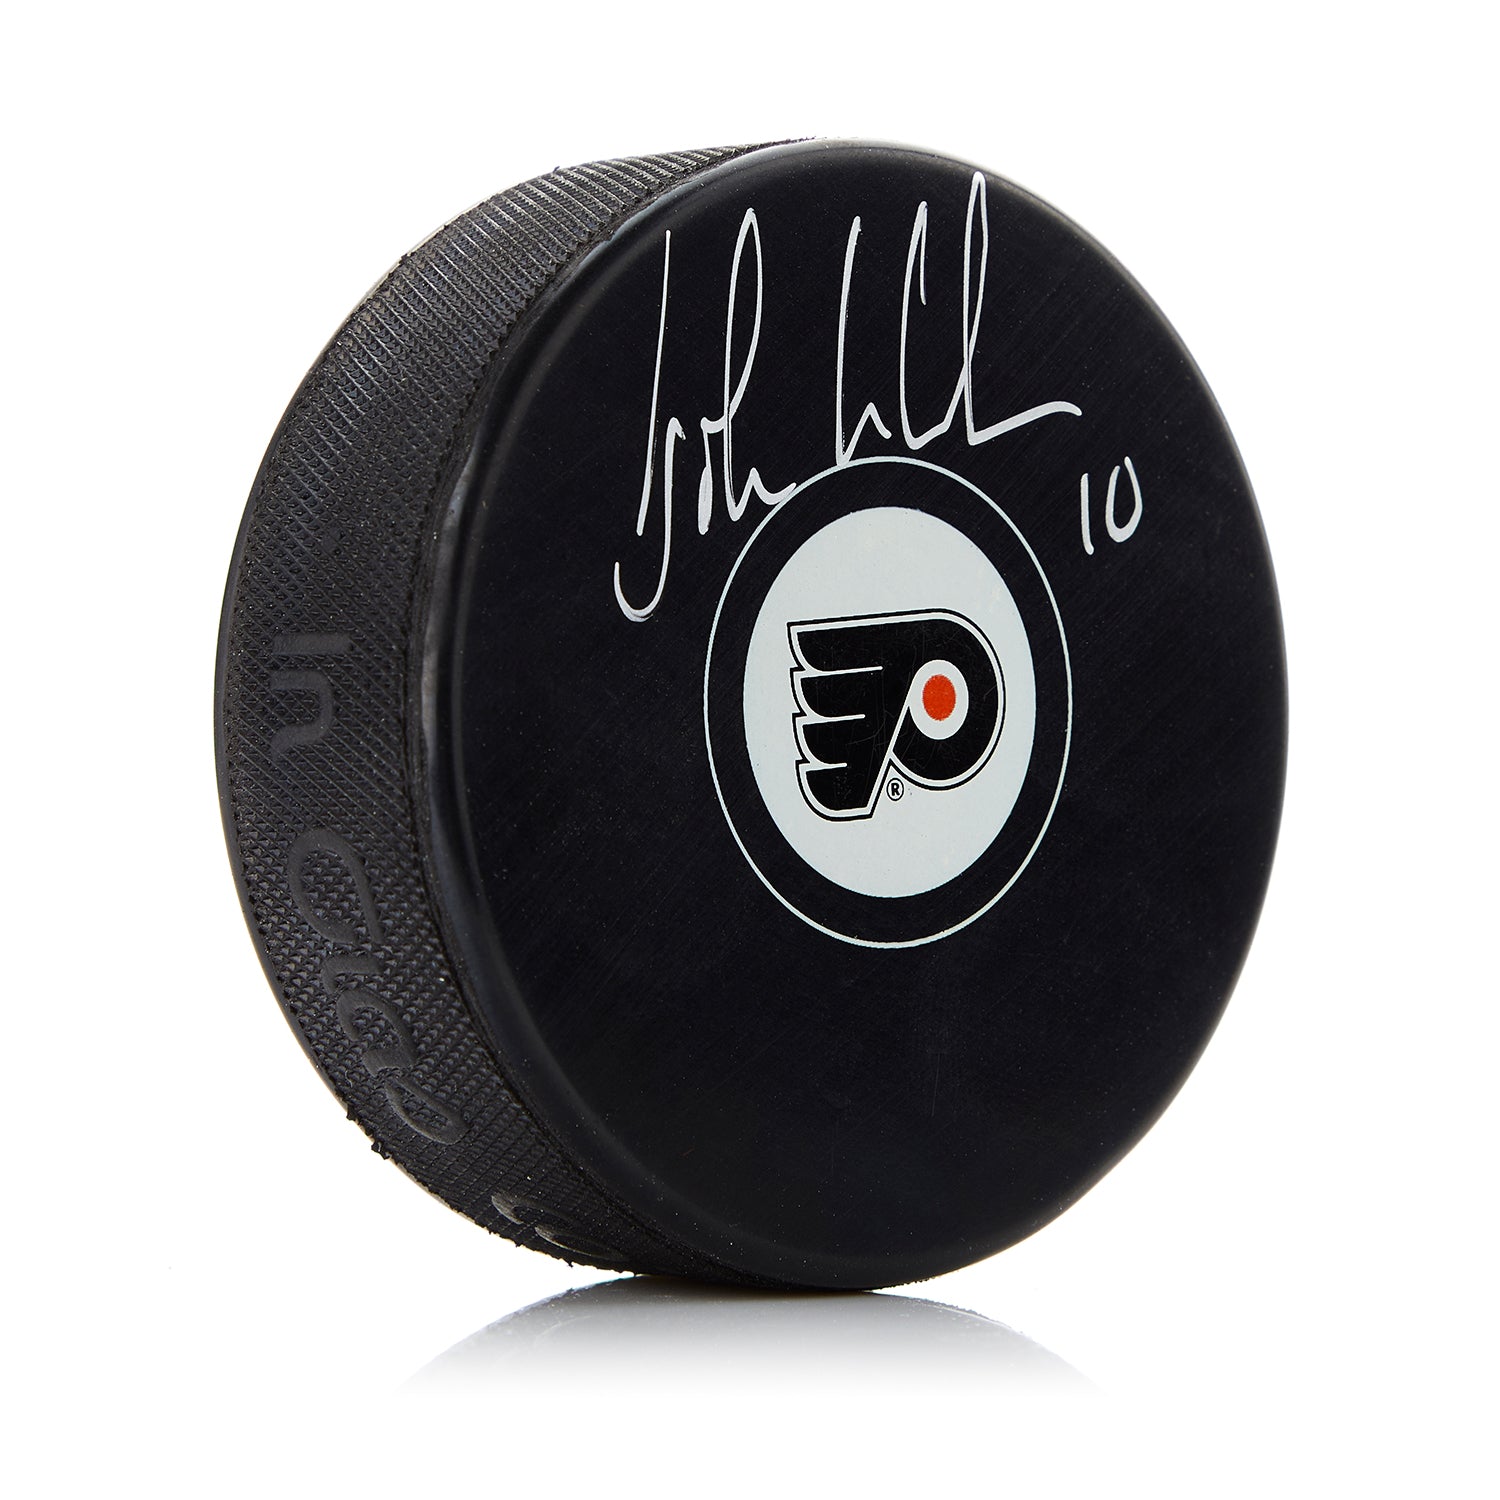 John LeClair Philadelphia Flyers Autographed Hockey Puck